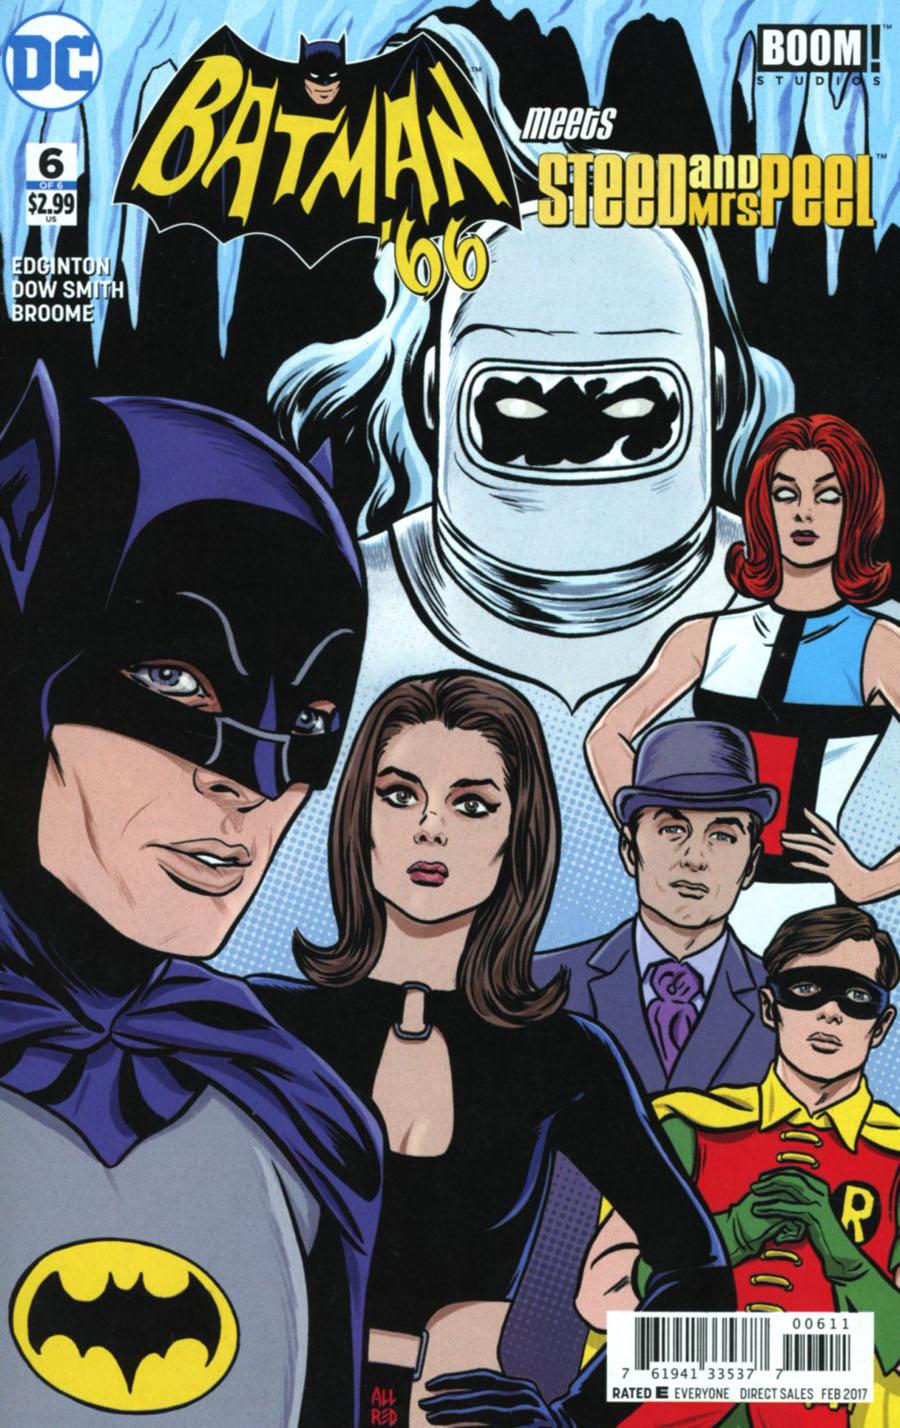 Batman 66 Meets Steed And Mrs Peel Vol. 1 #6